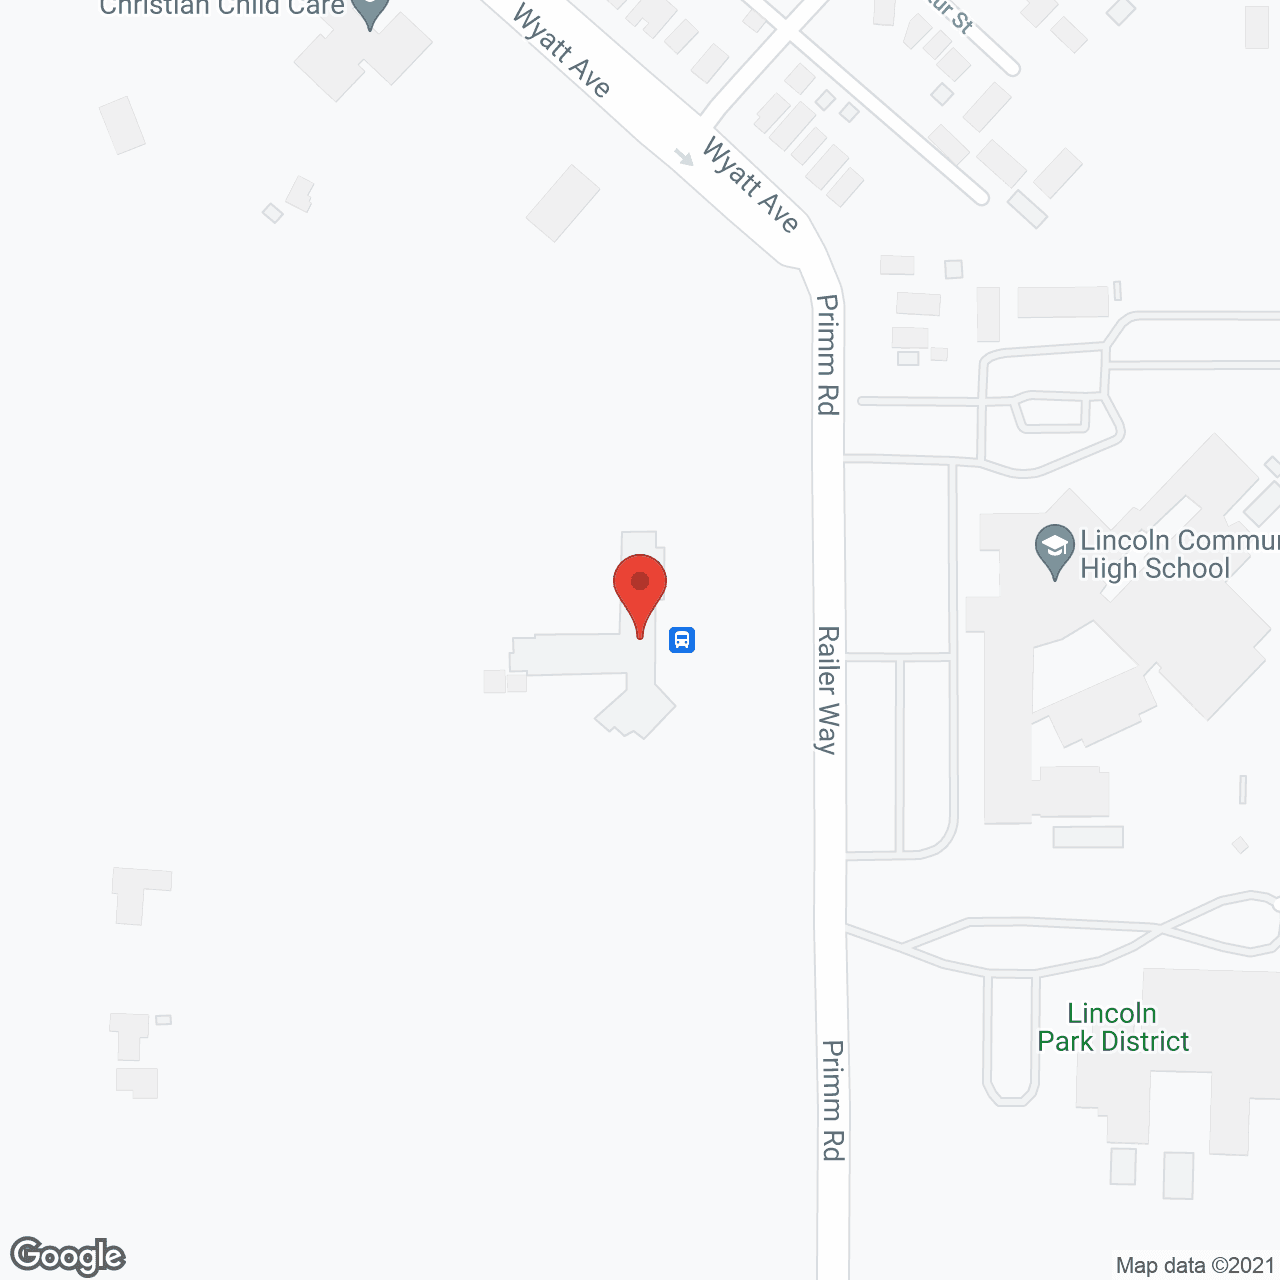 Friendship Manor in google map